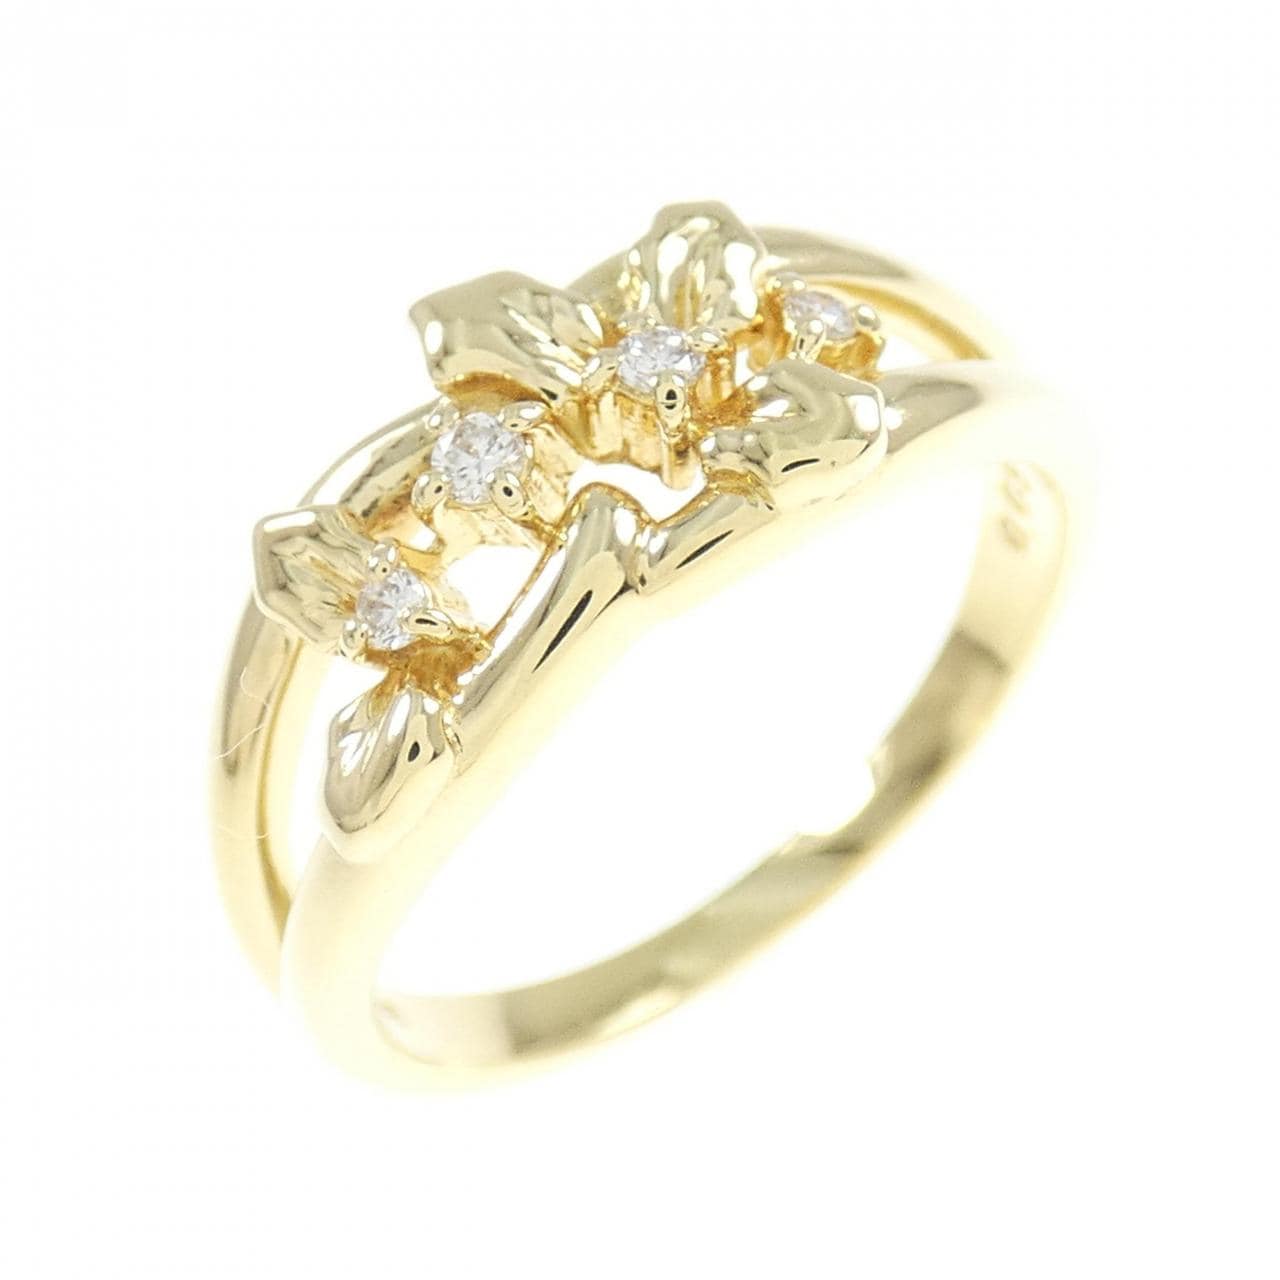 Tasaki Diamond ring 0.05CT